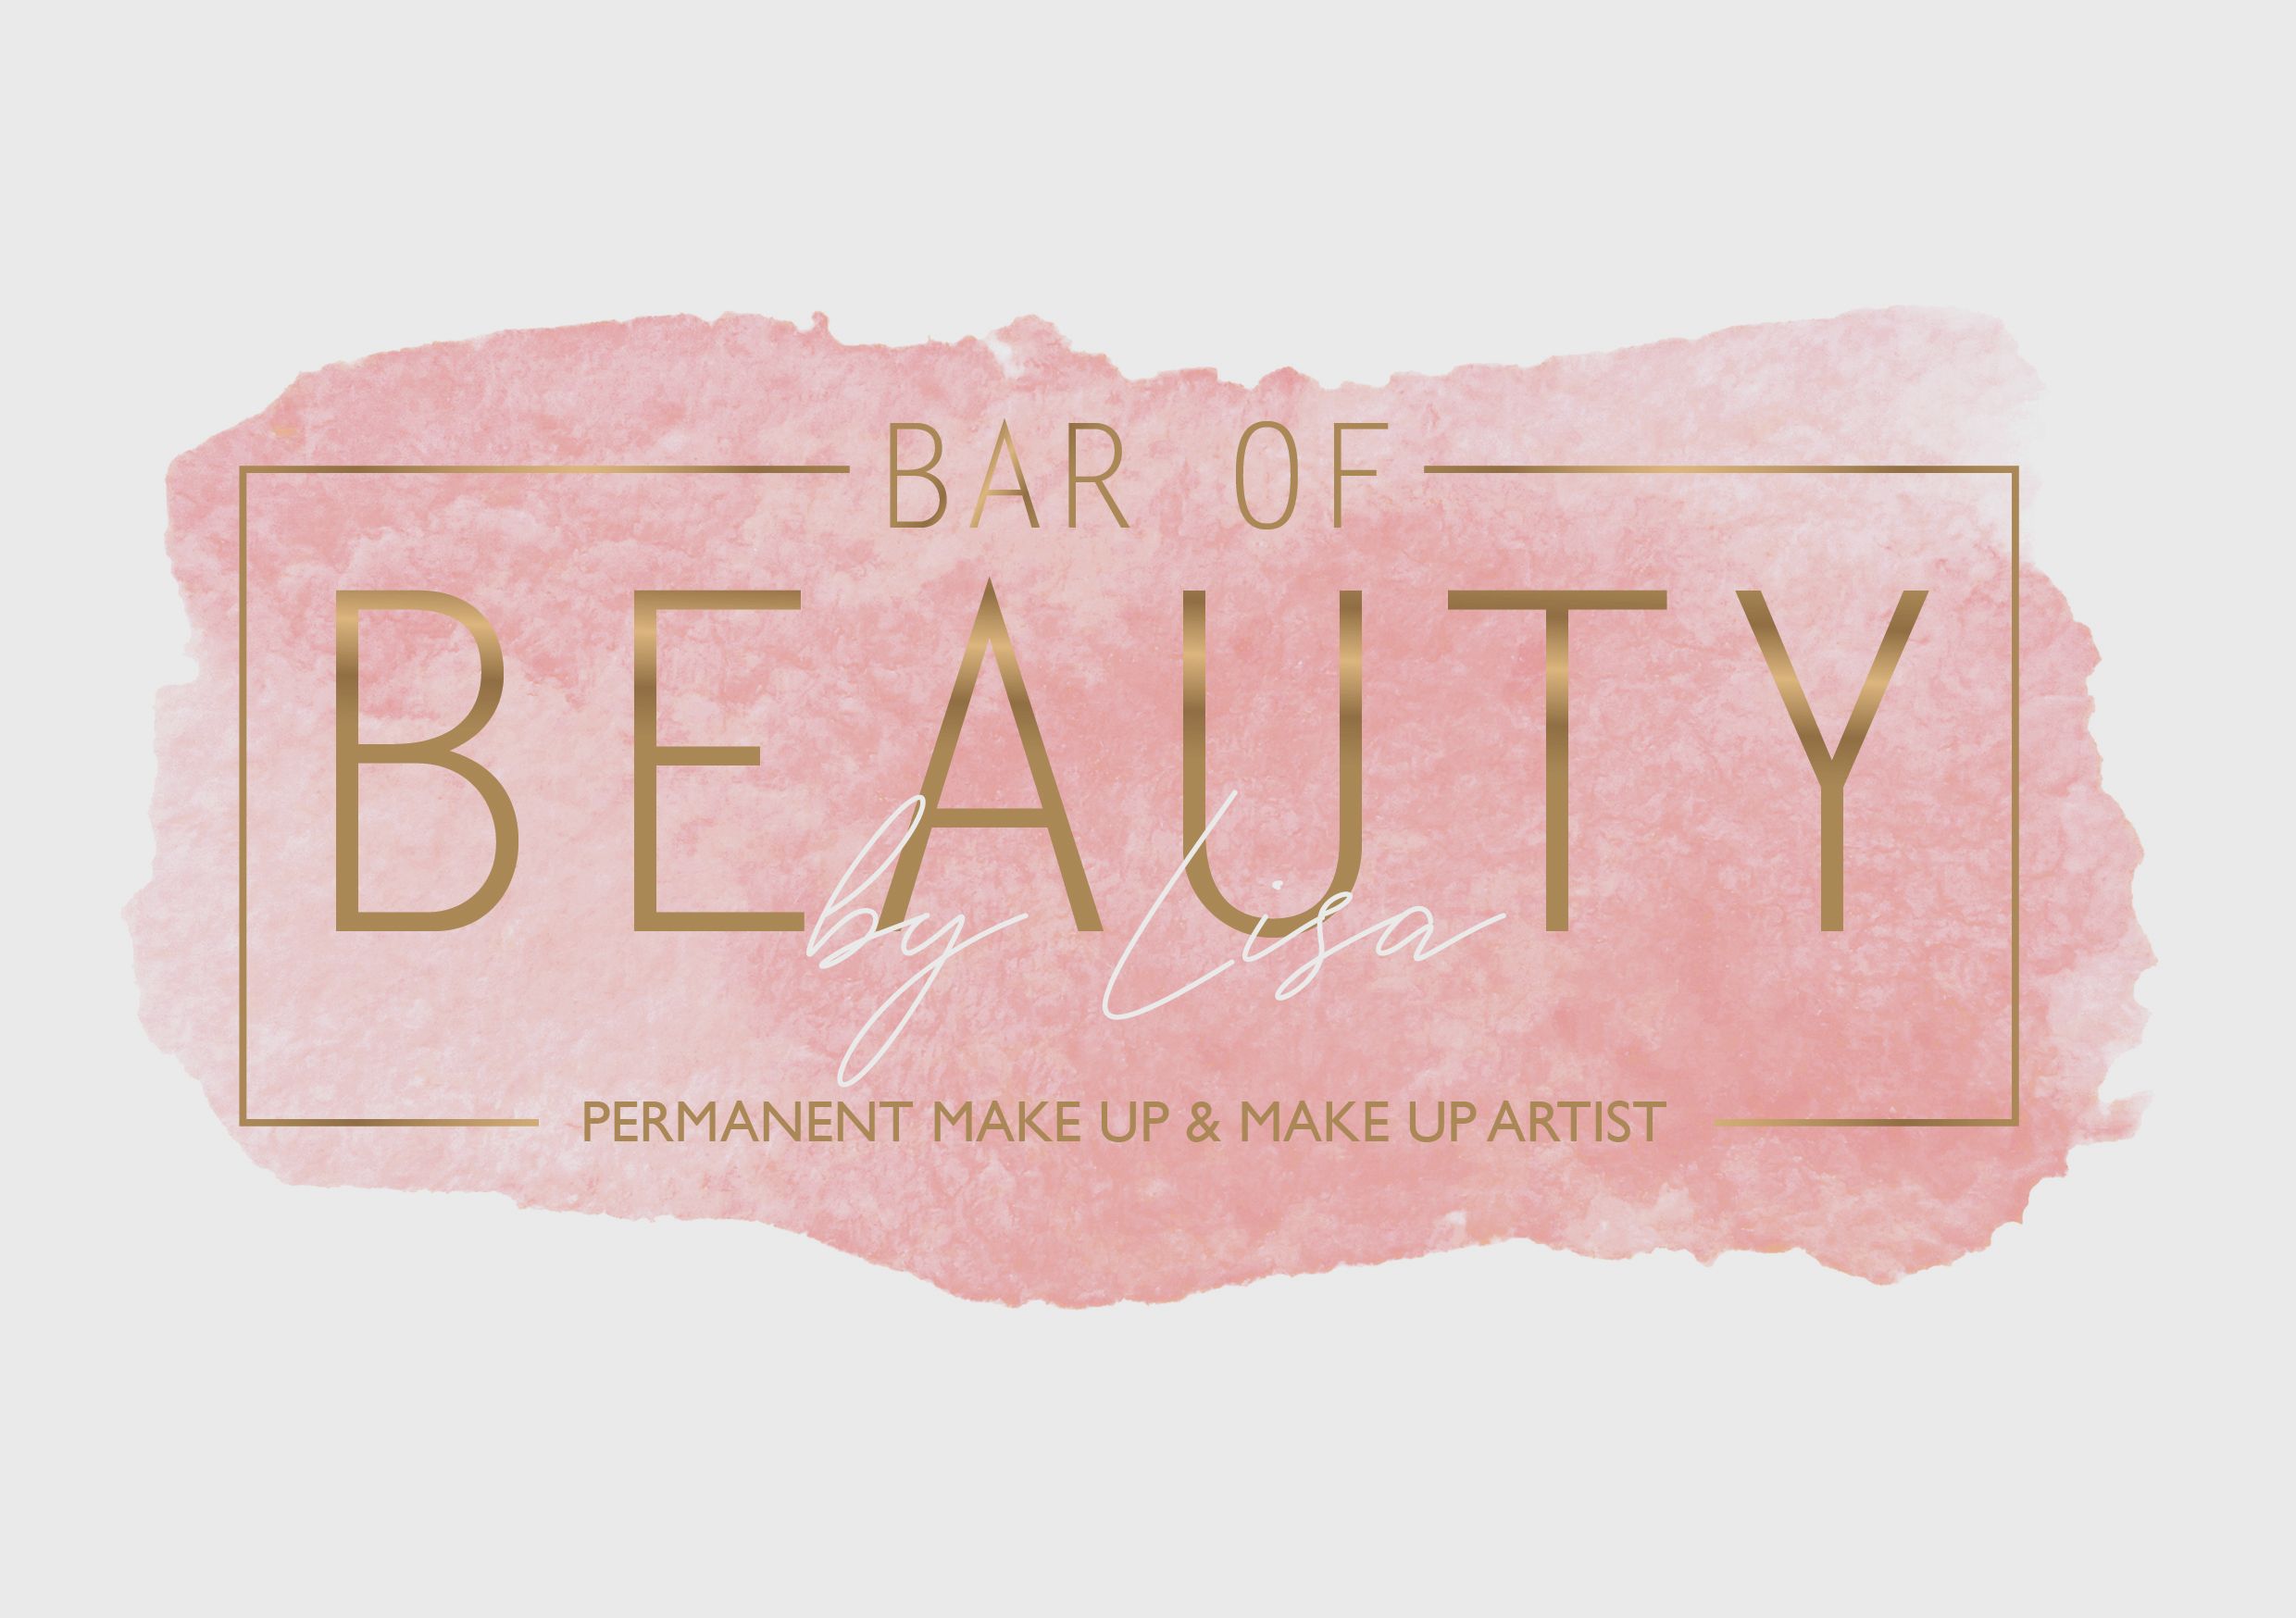 Bar of Beauty by Lisa